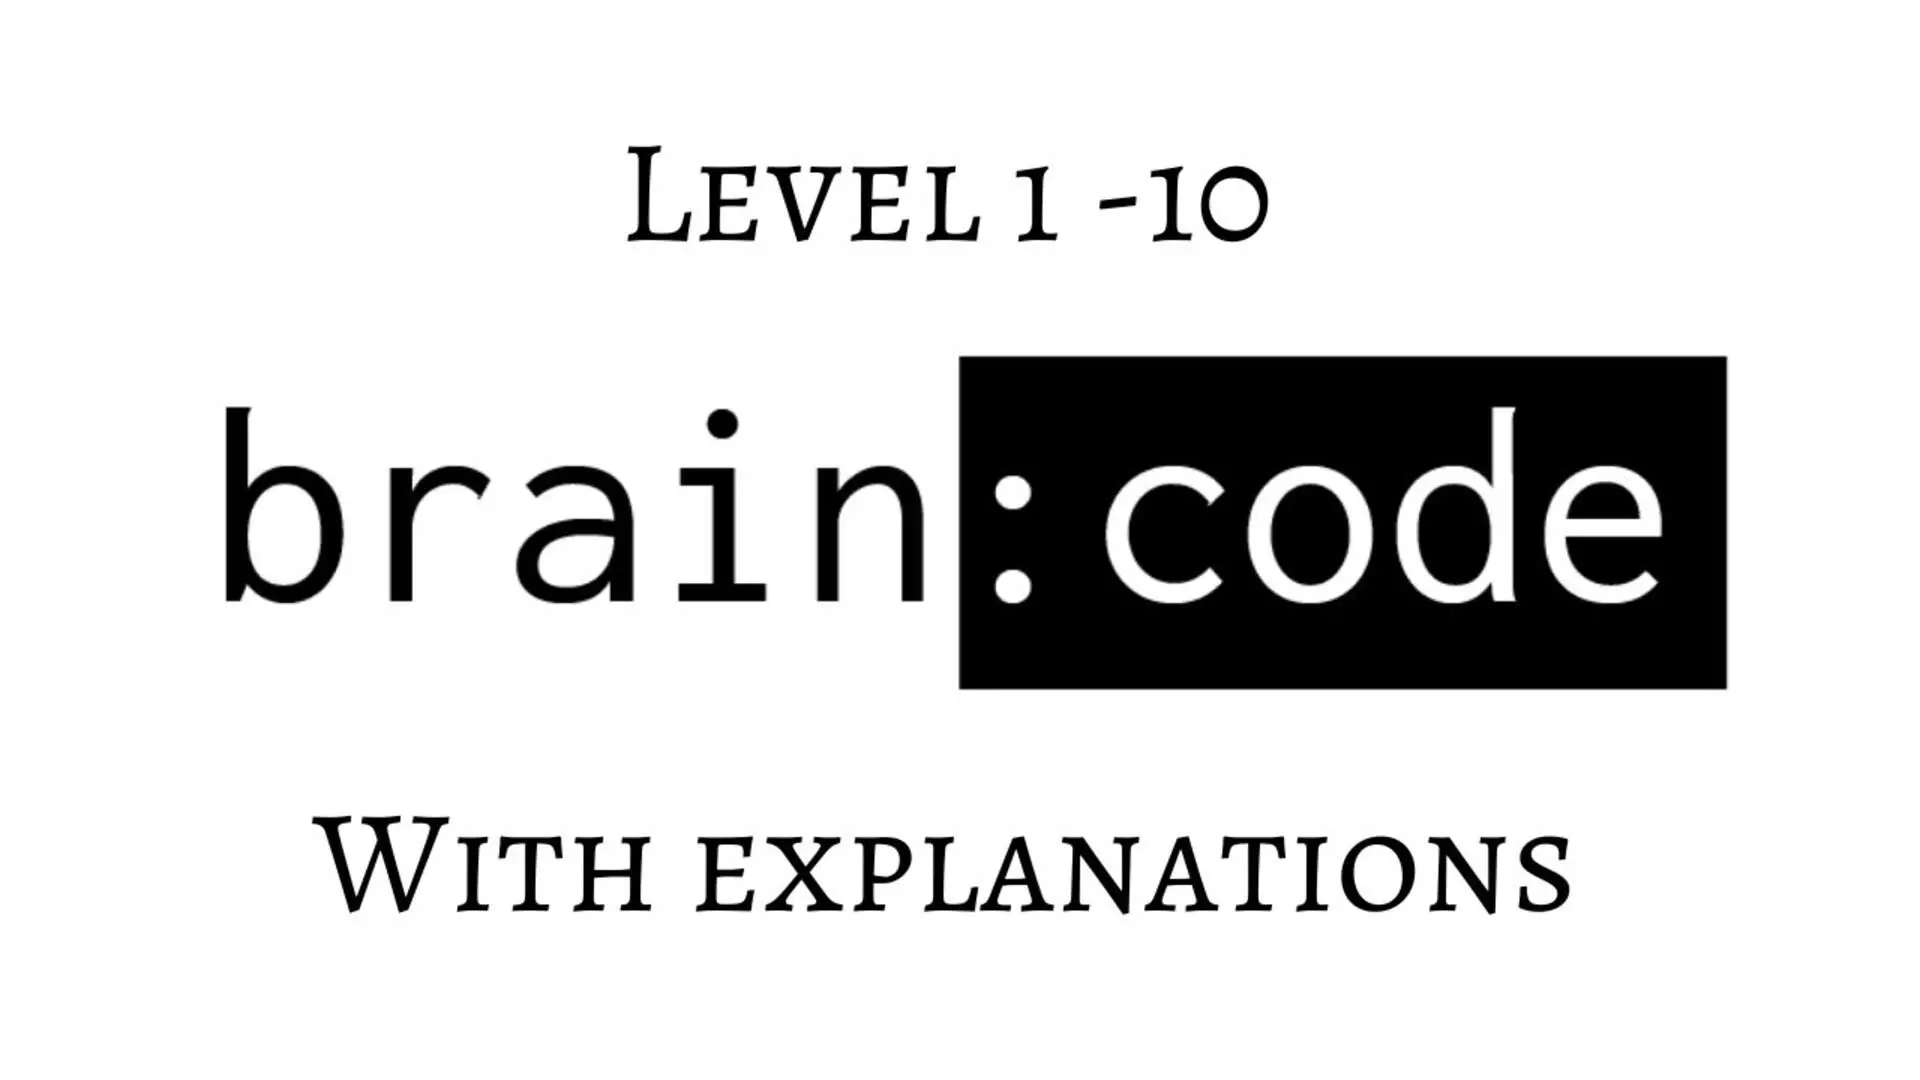 Code brains